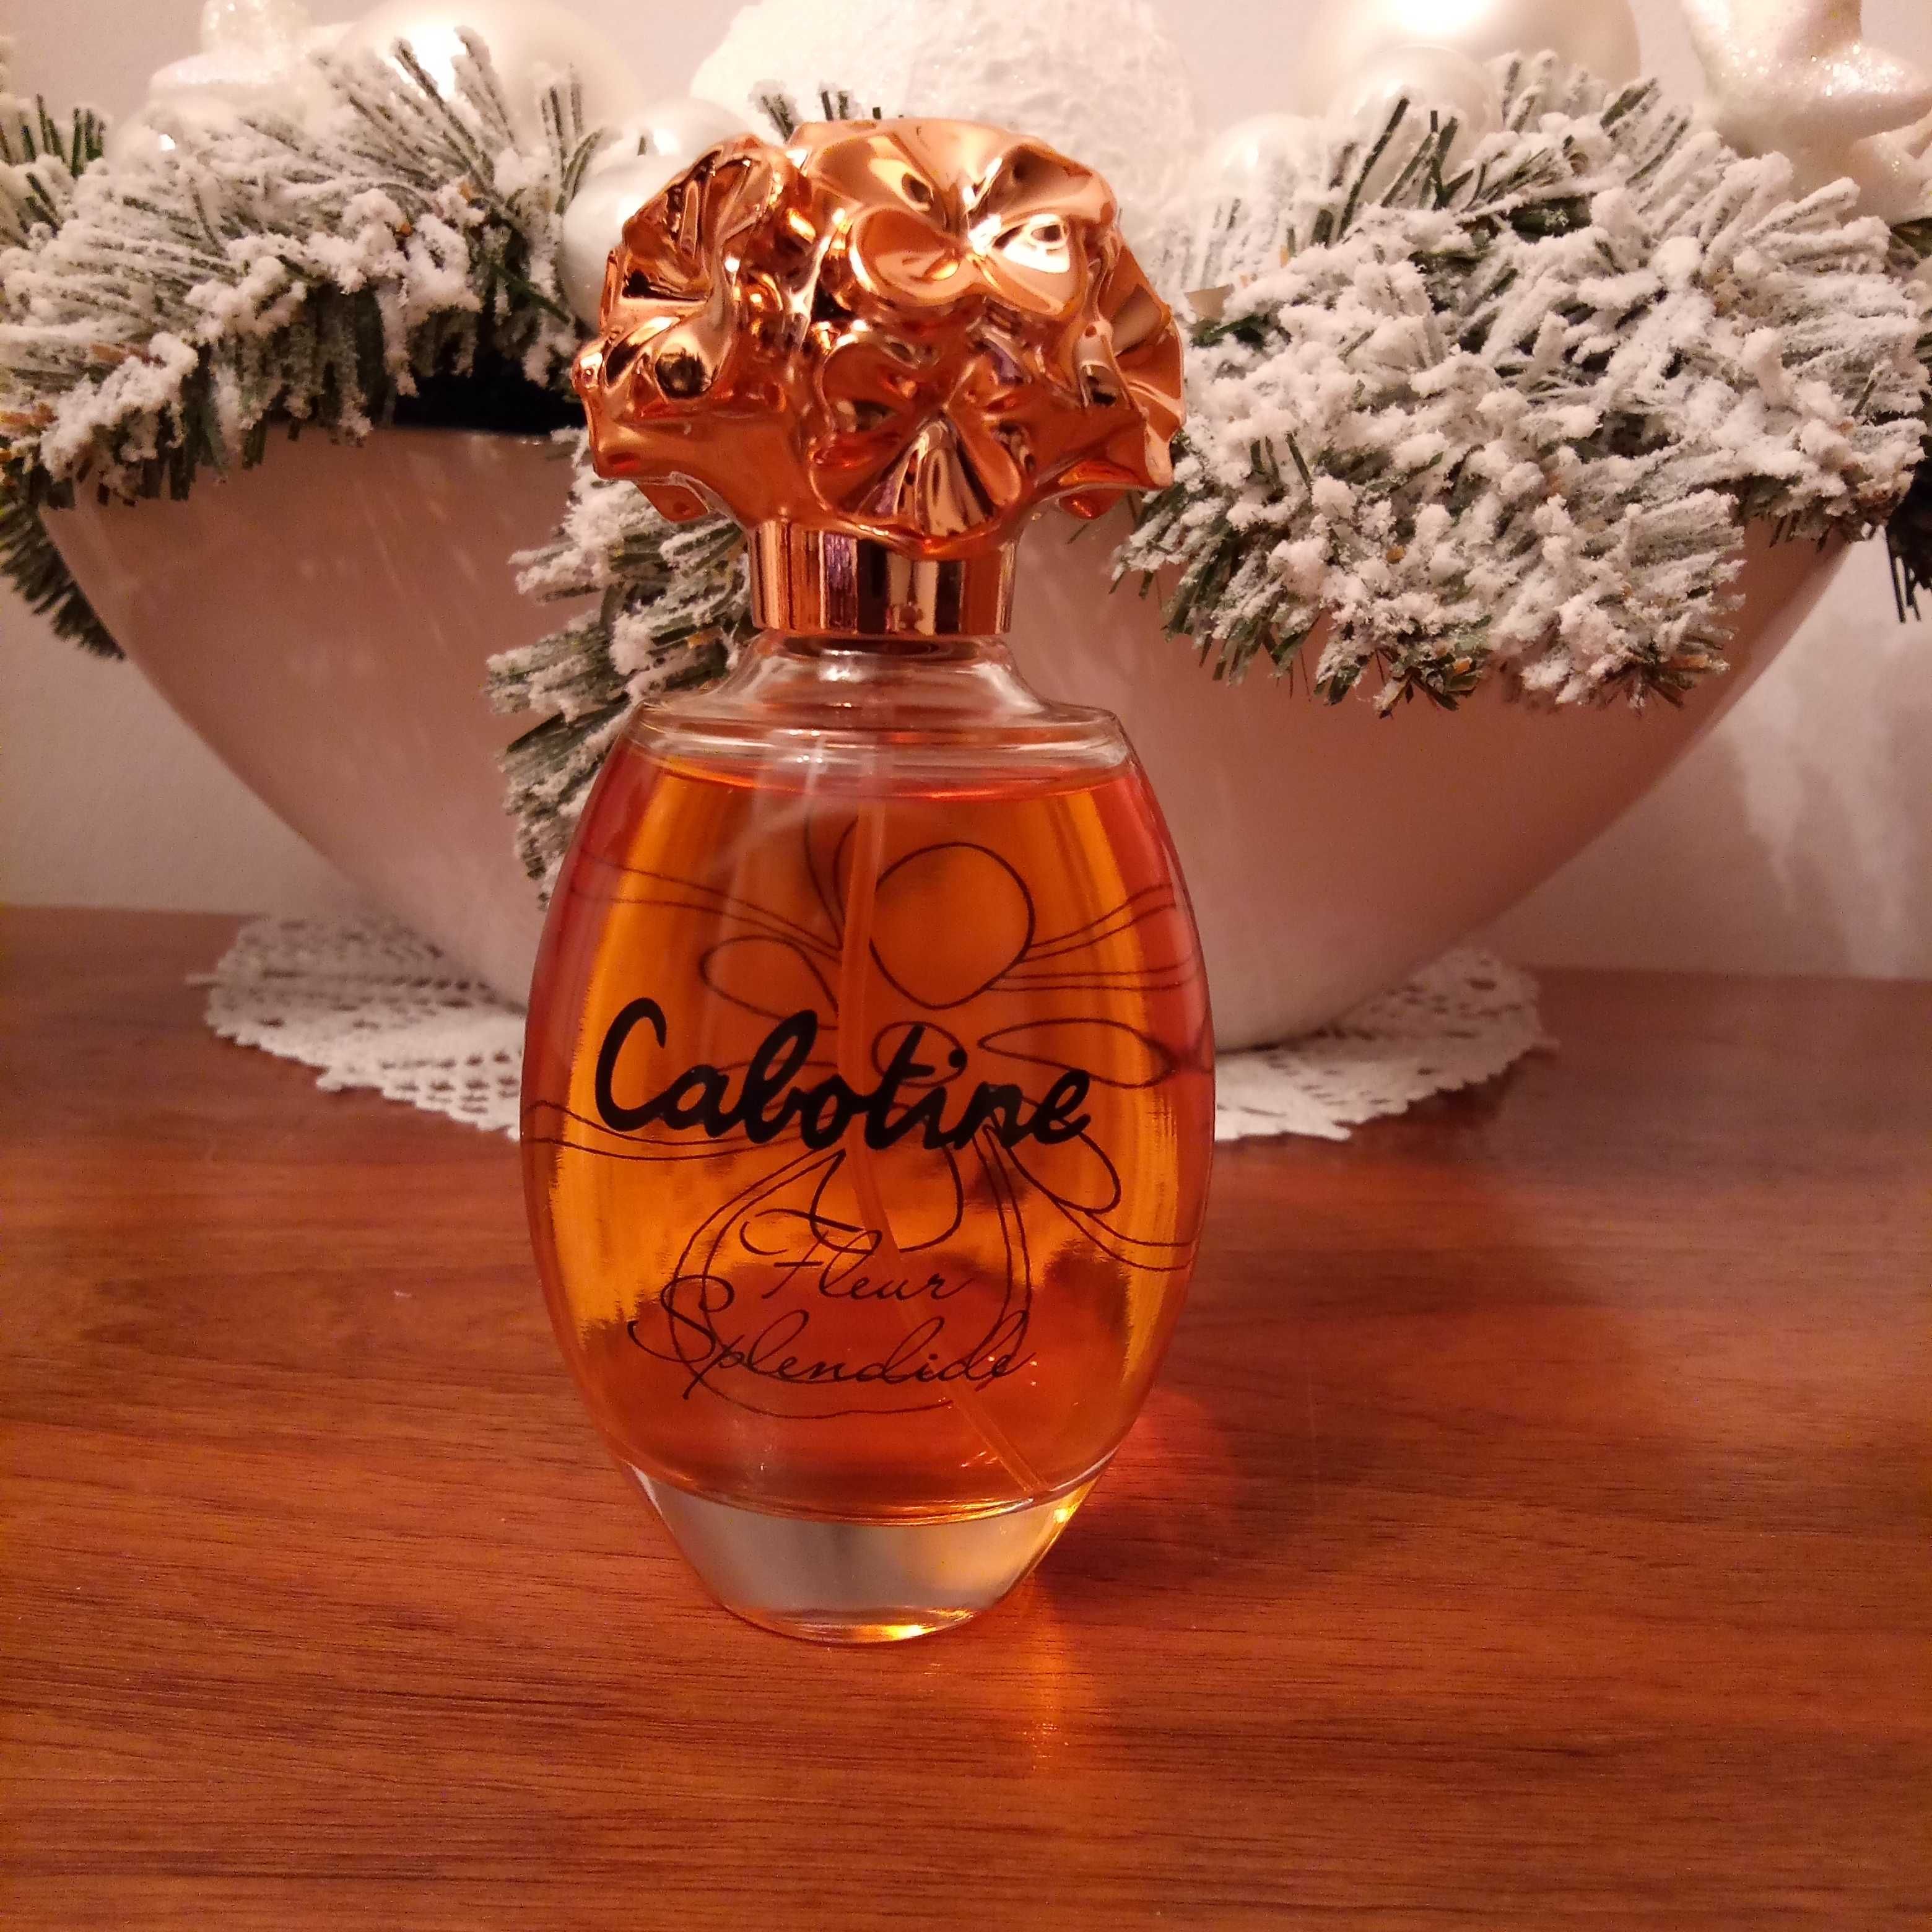 24. Perfumy Cabotine Fleur Splendide